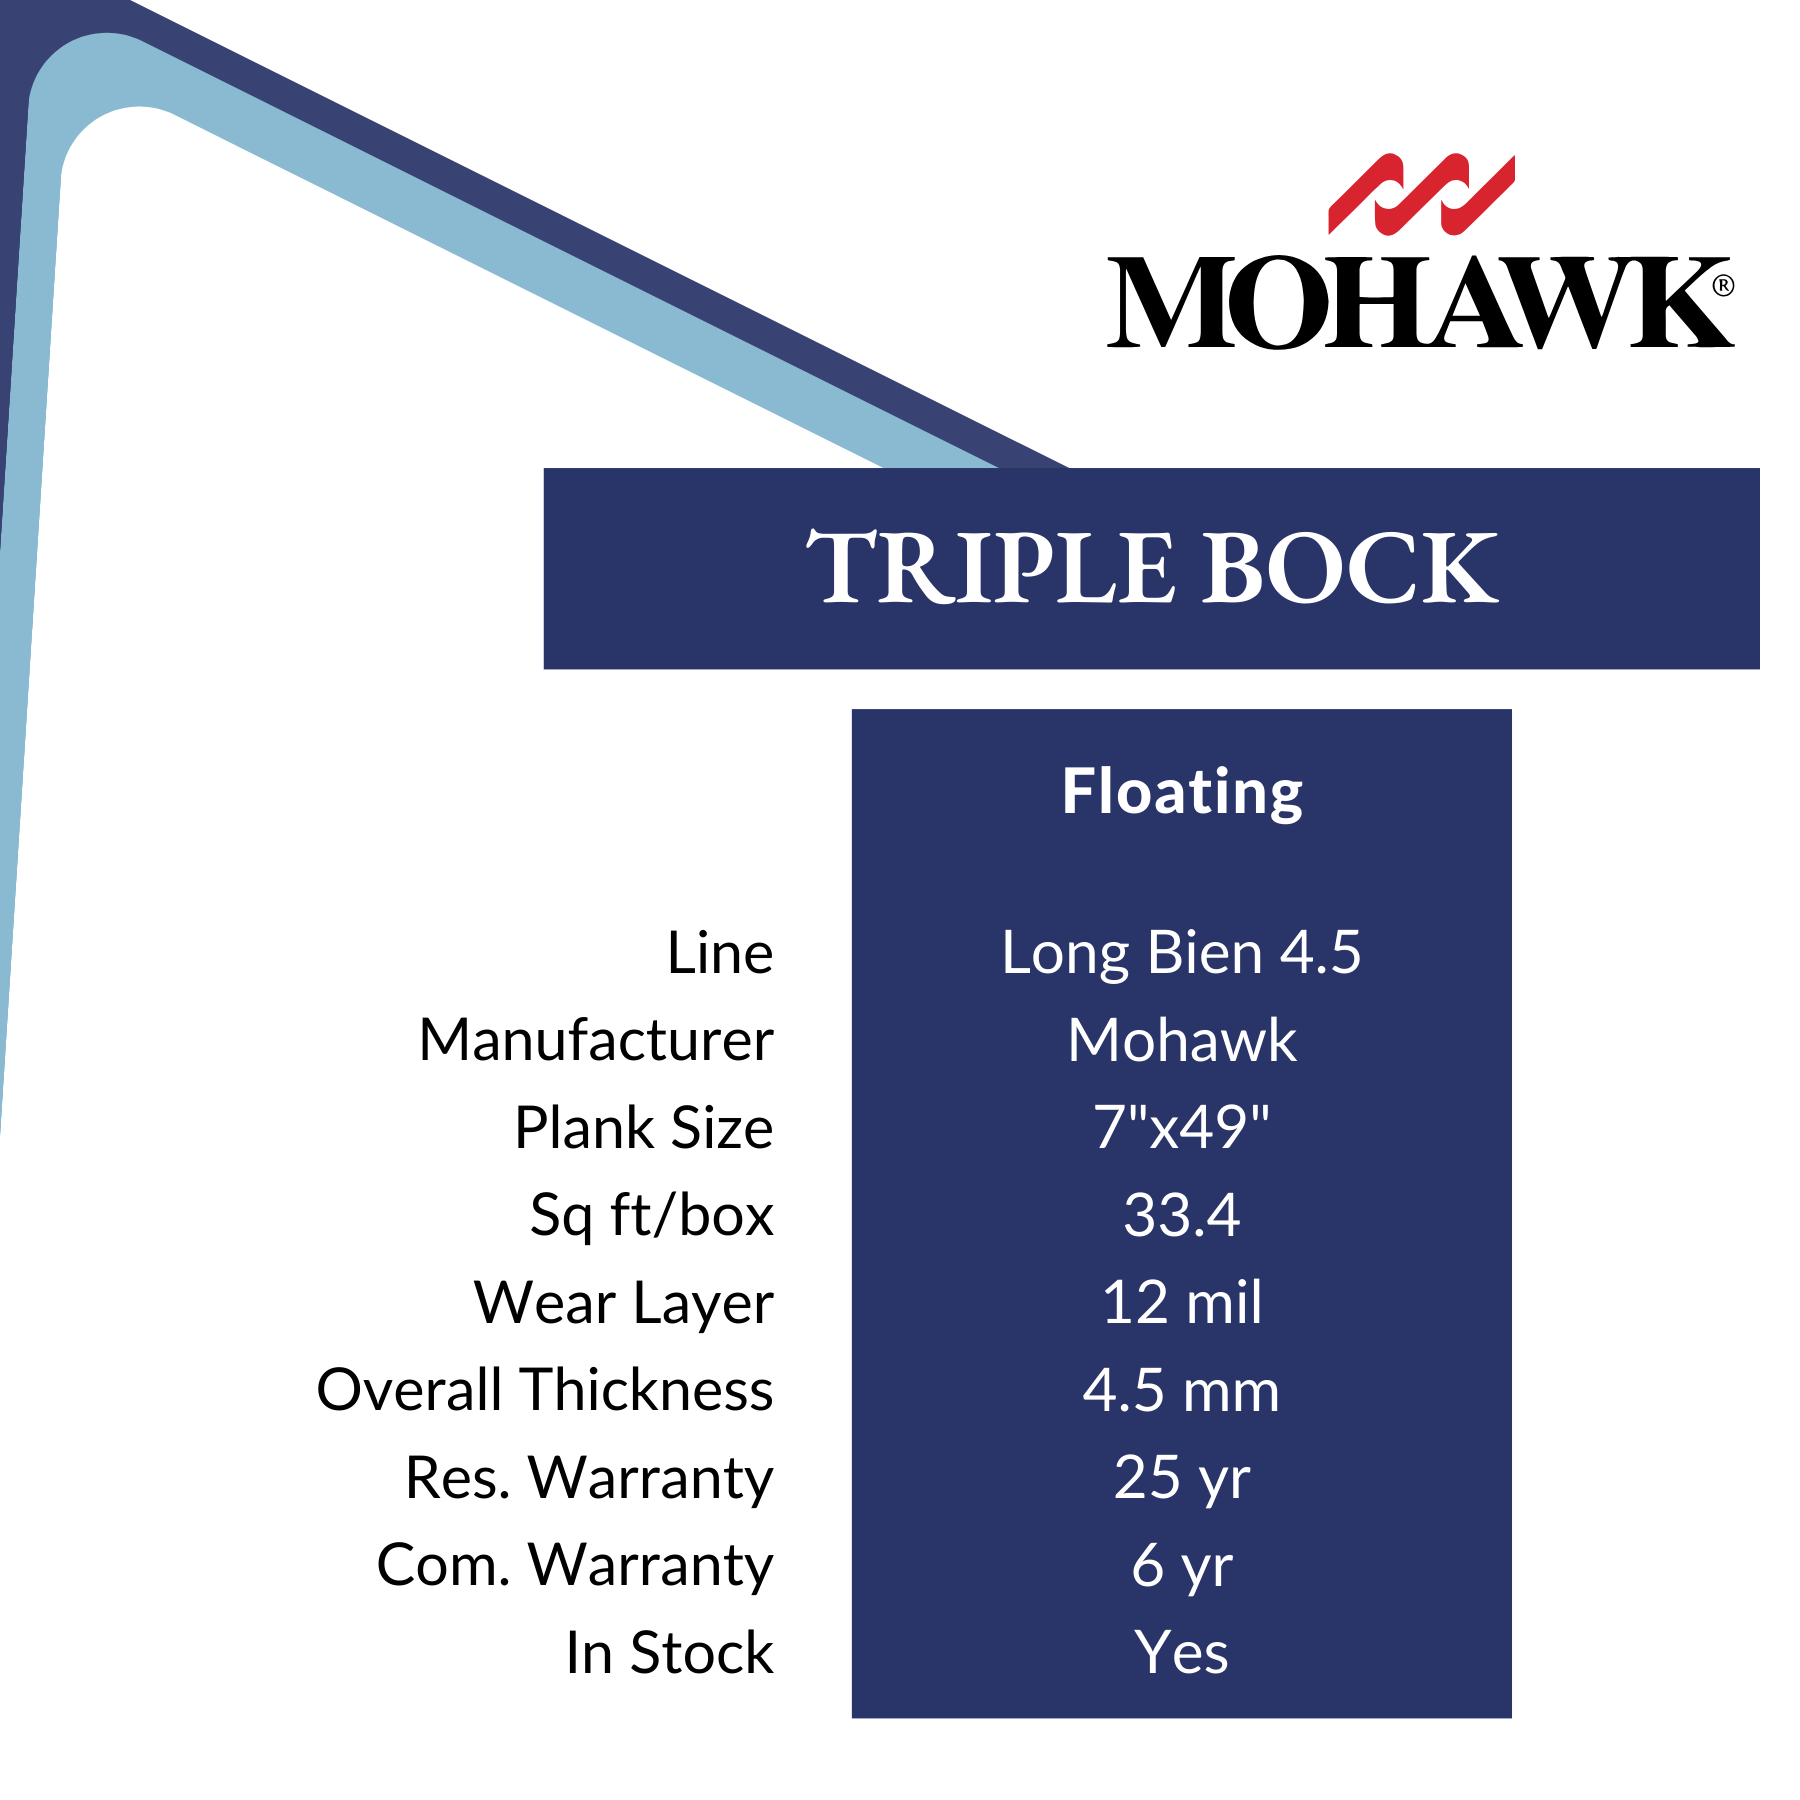 Triple Bock by Mohawk LVT Flooring from Calhoun's, Springfield, IL Specs: 12 mil wear layer